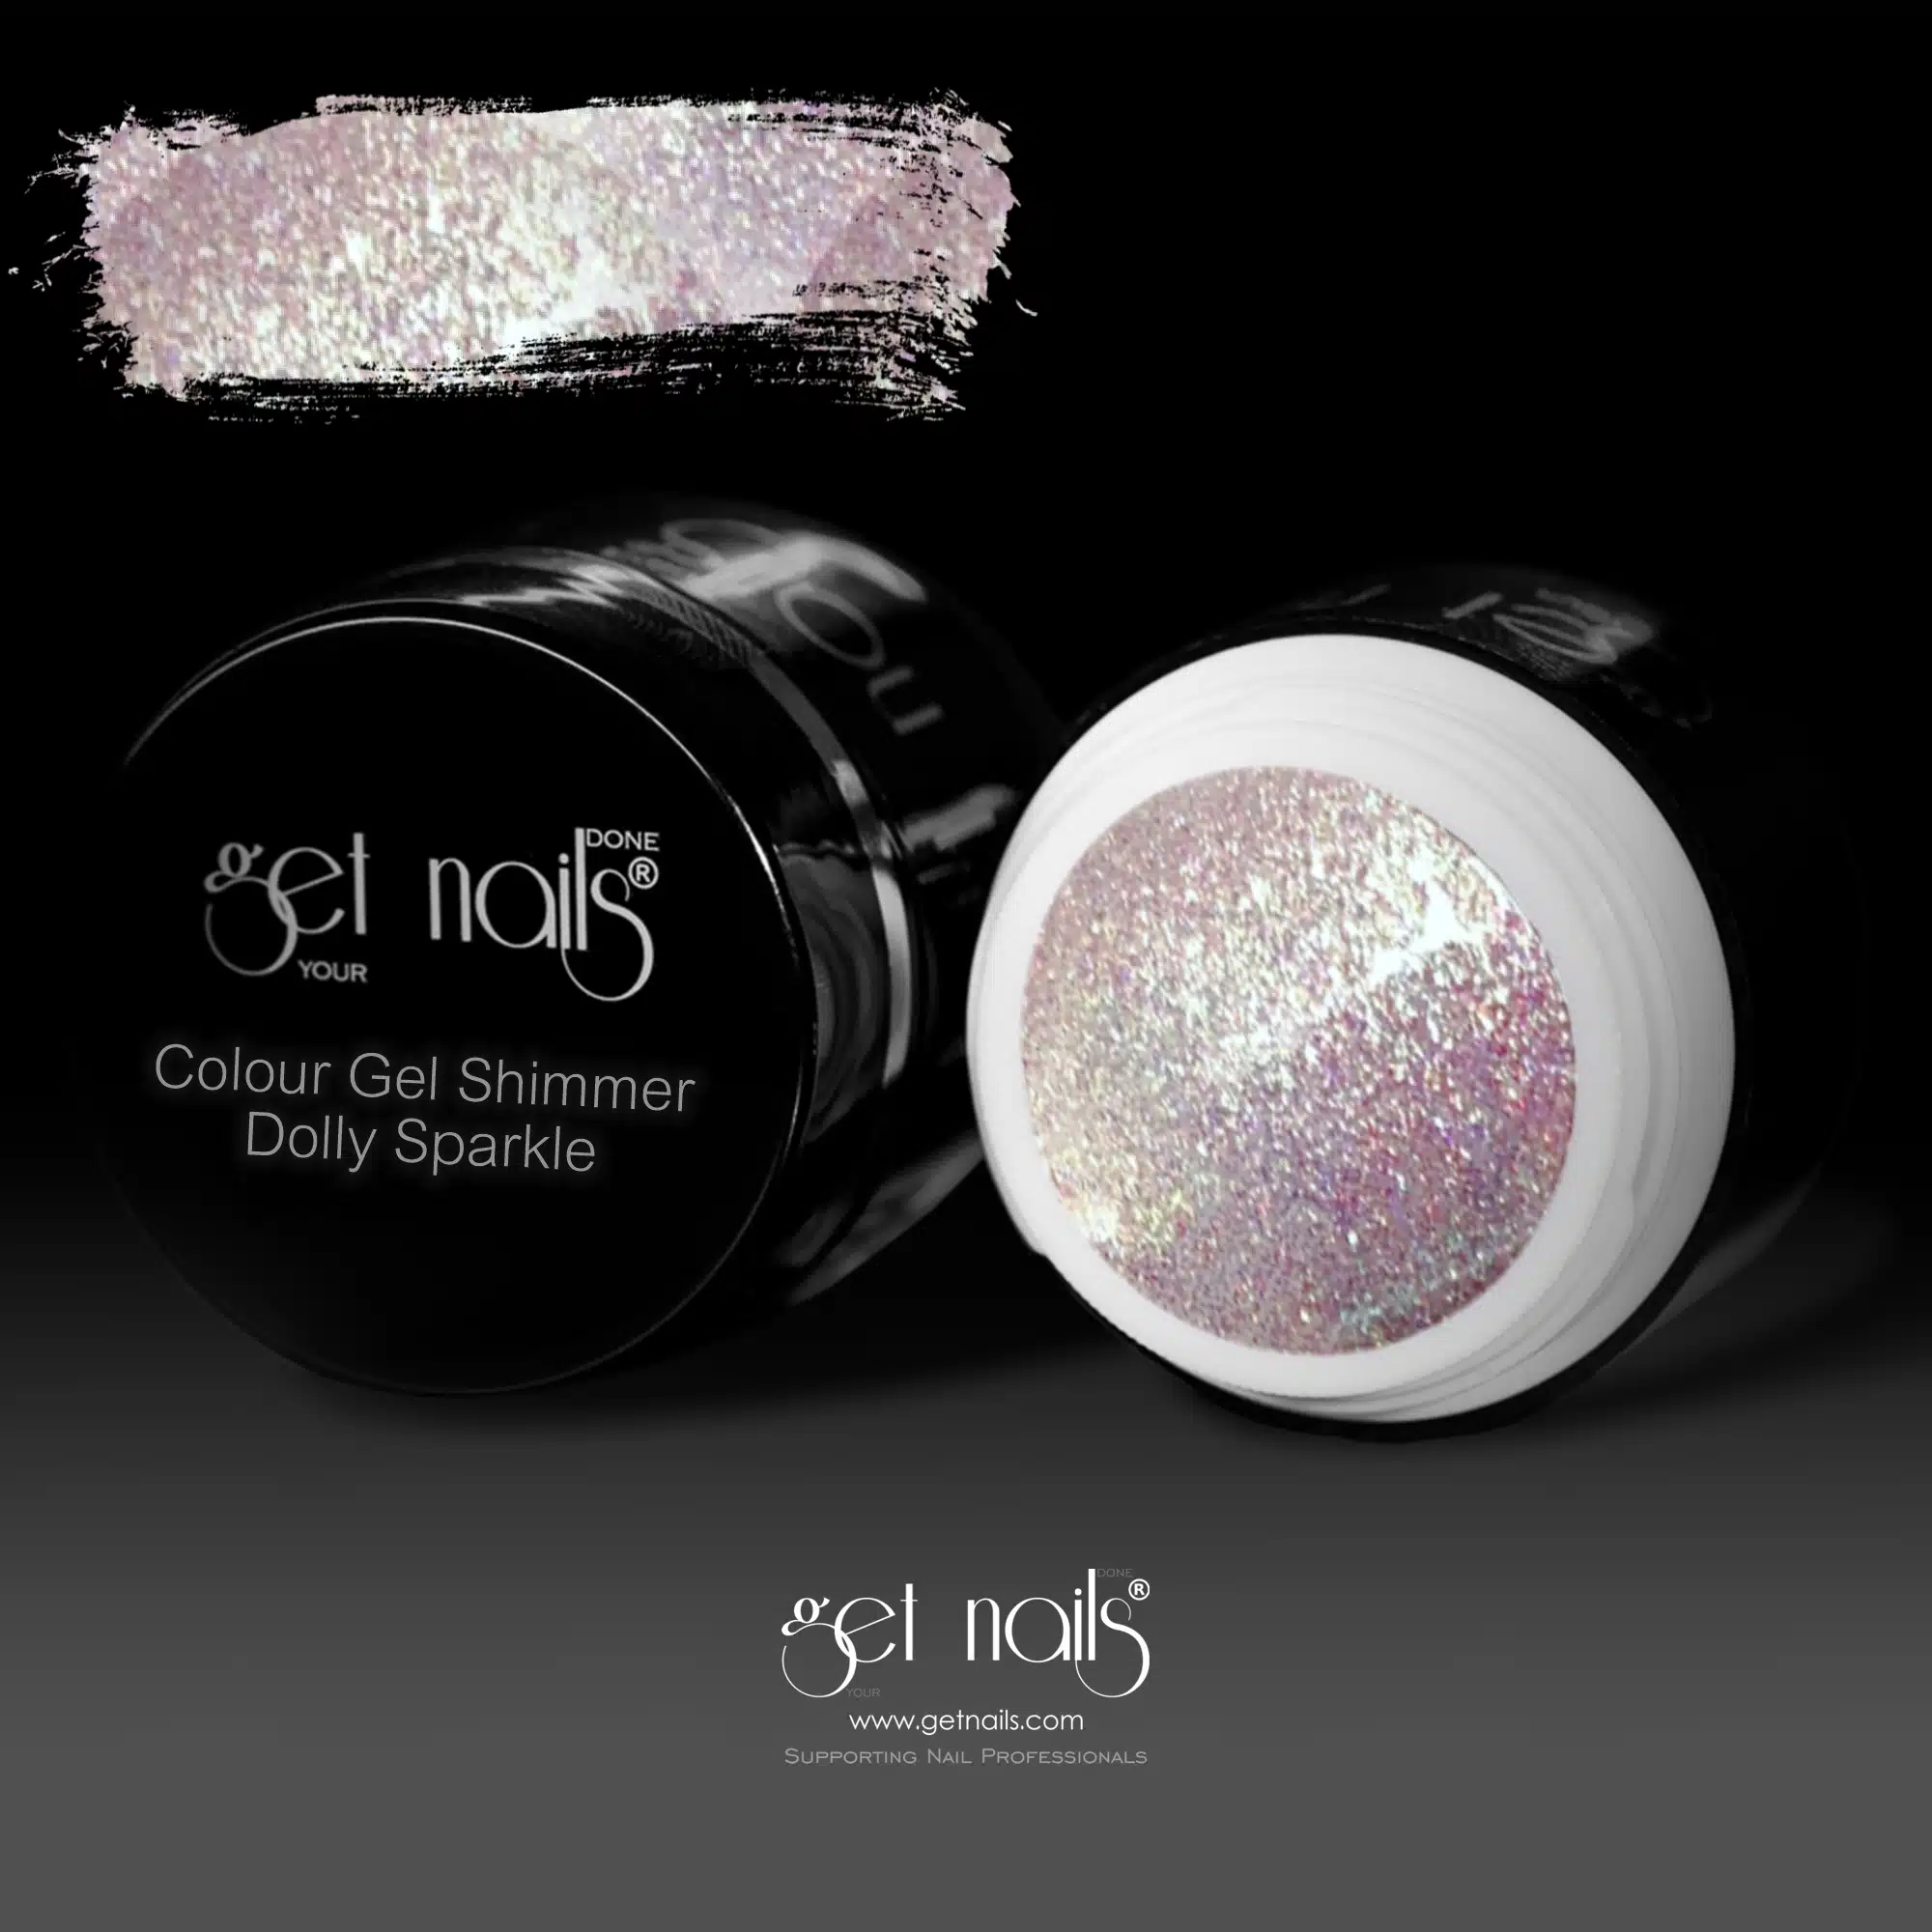 Get Nails Austria - Colour Gel Shimmer Dolly Sparkle 5g